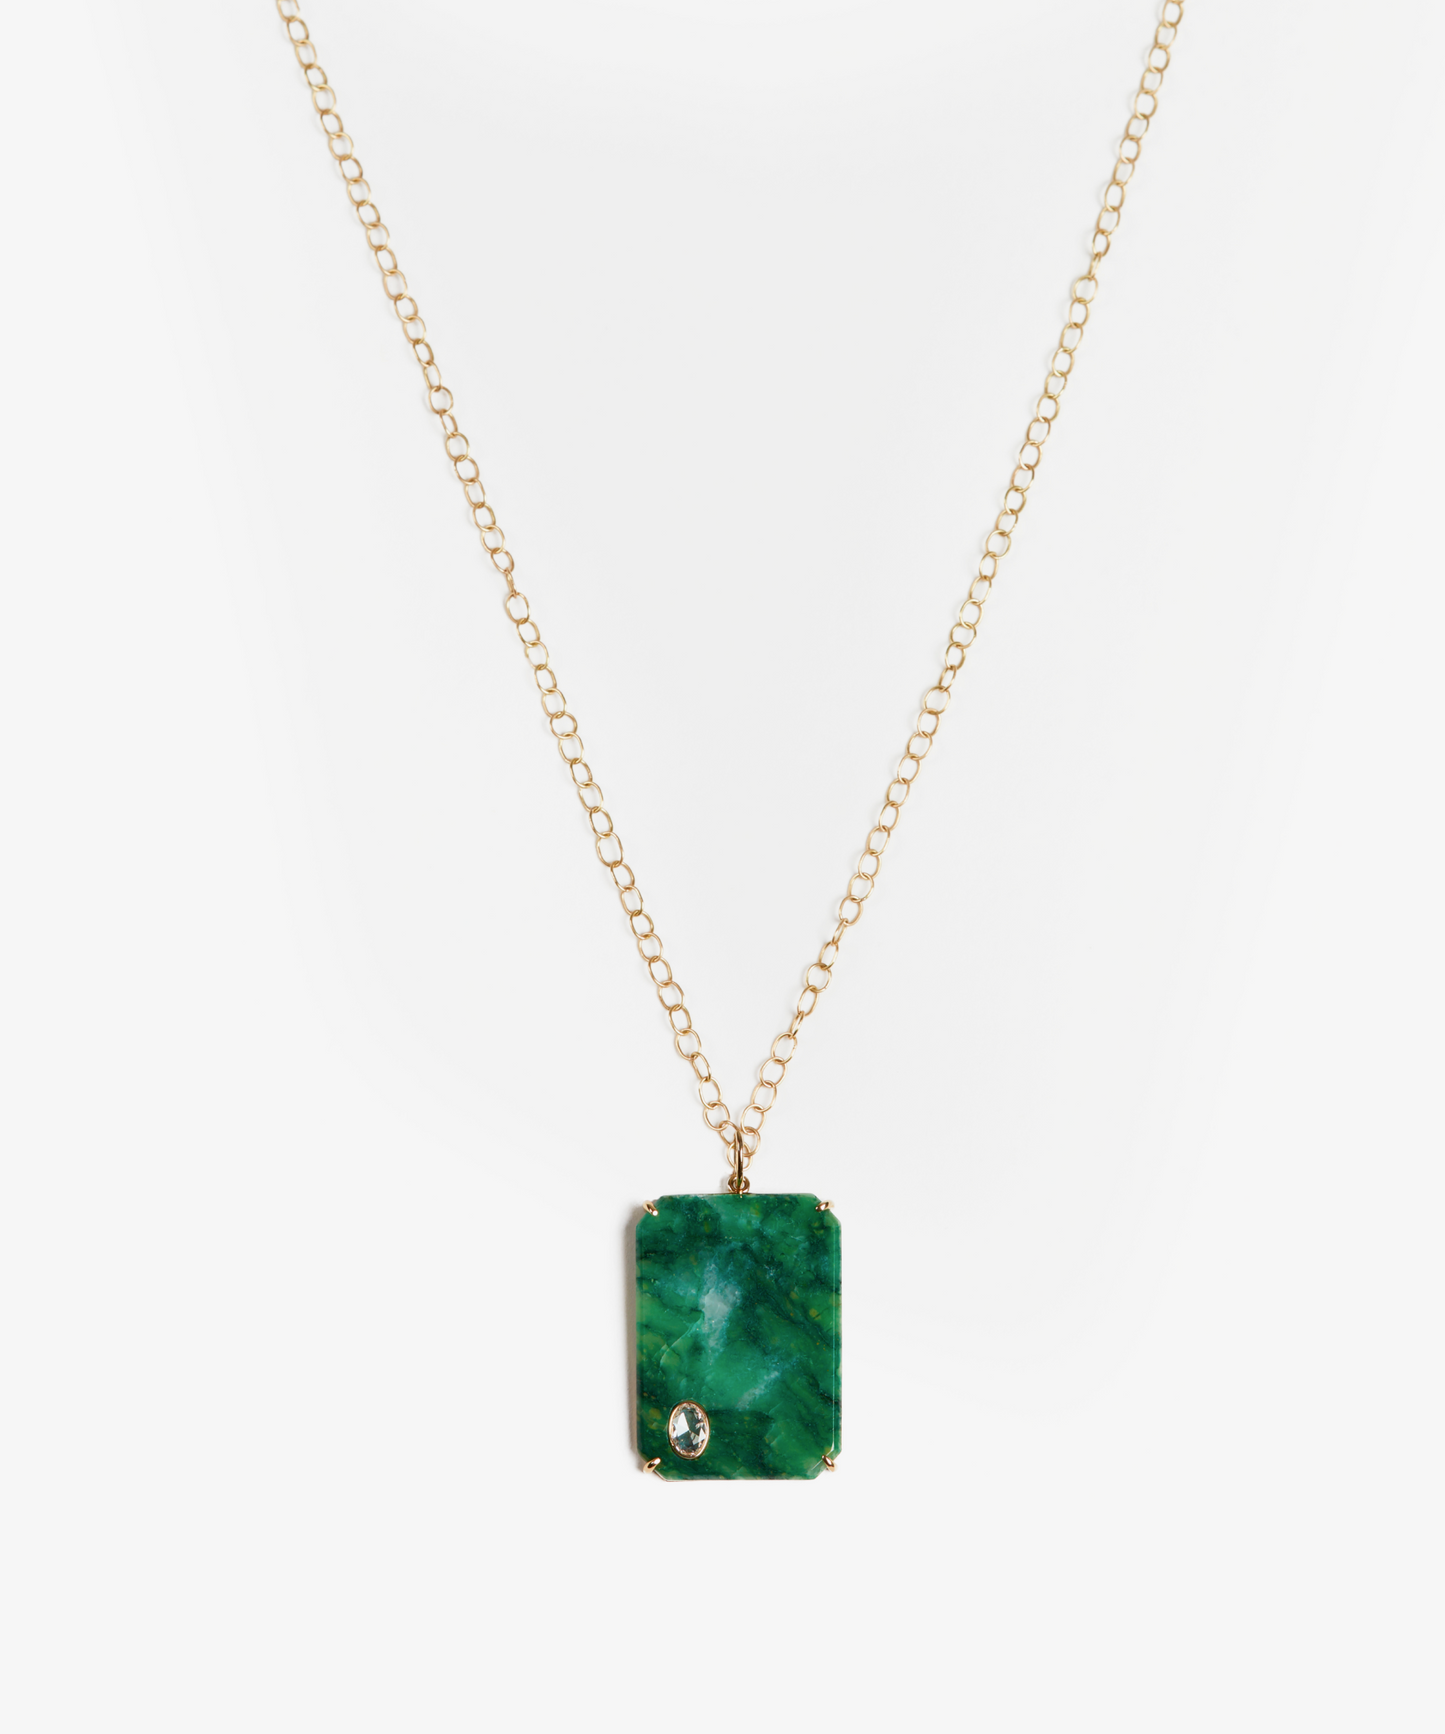 Brazilian Jade and Diamond Pendant on Link Chain